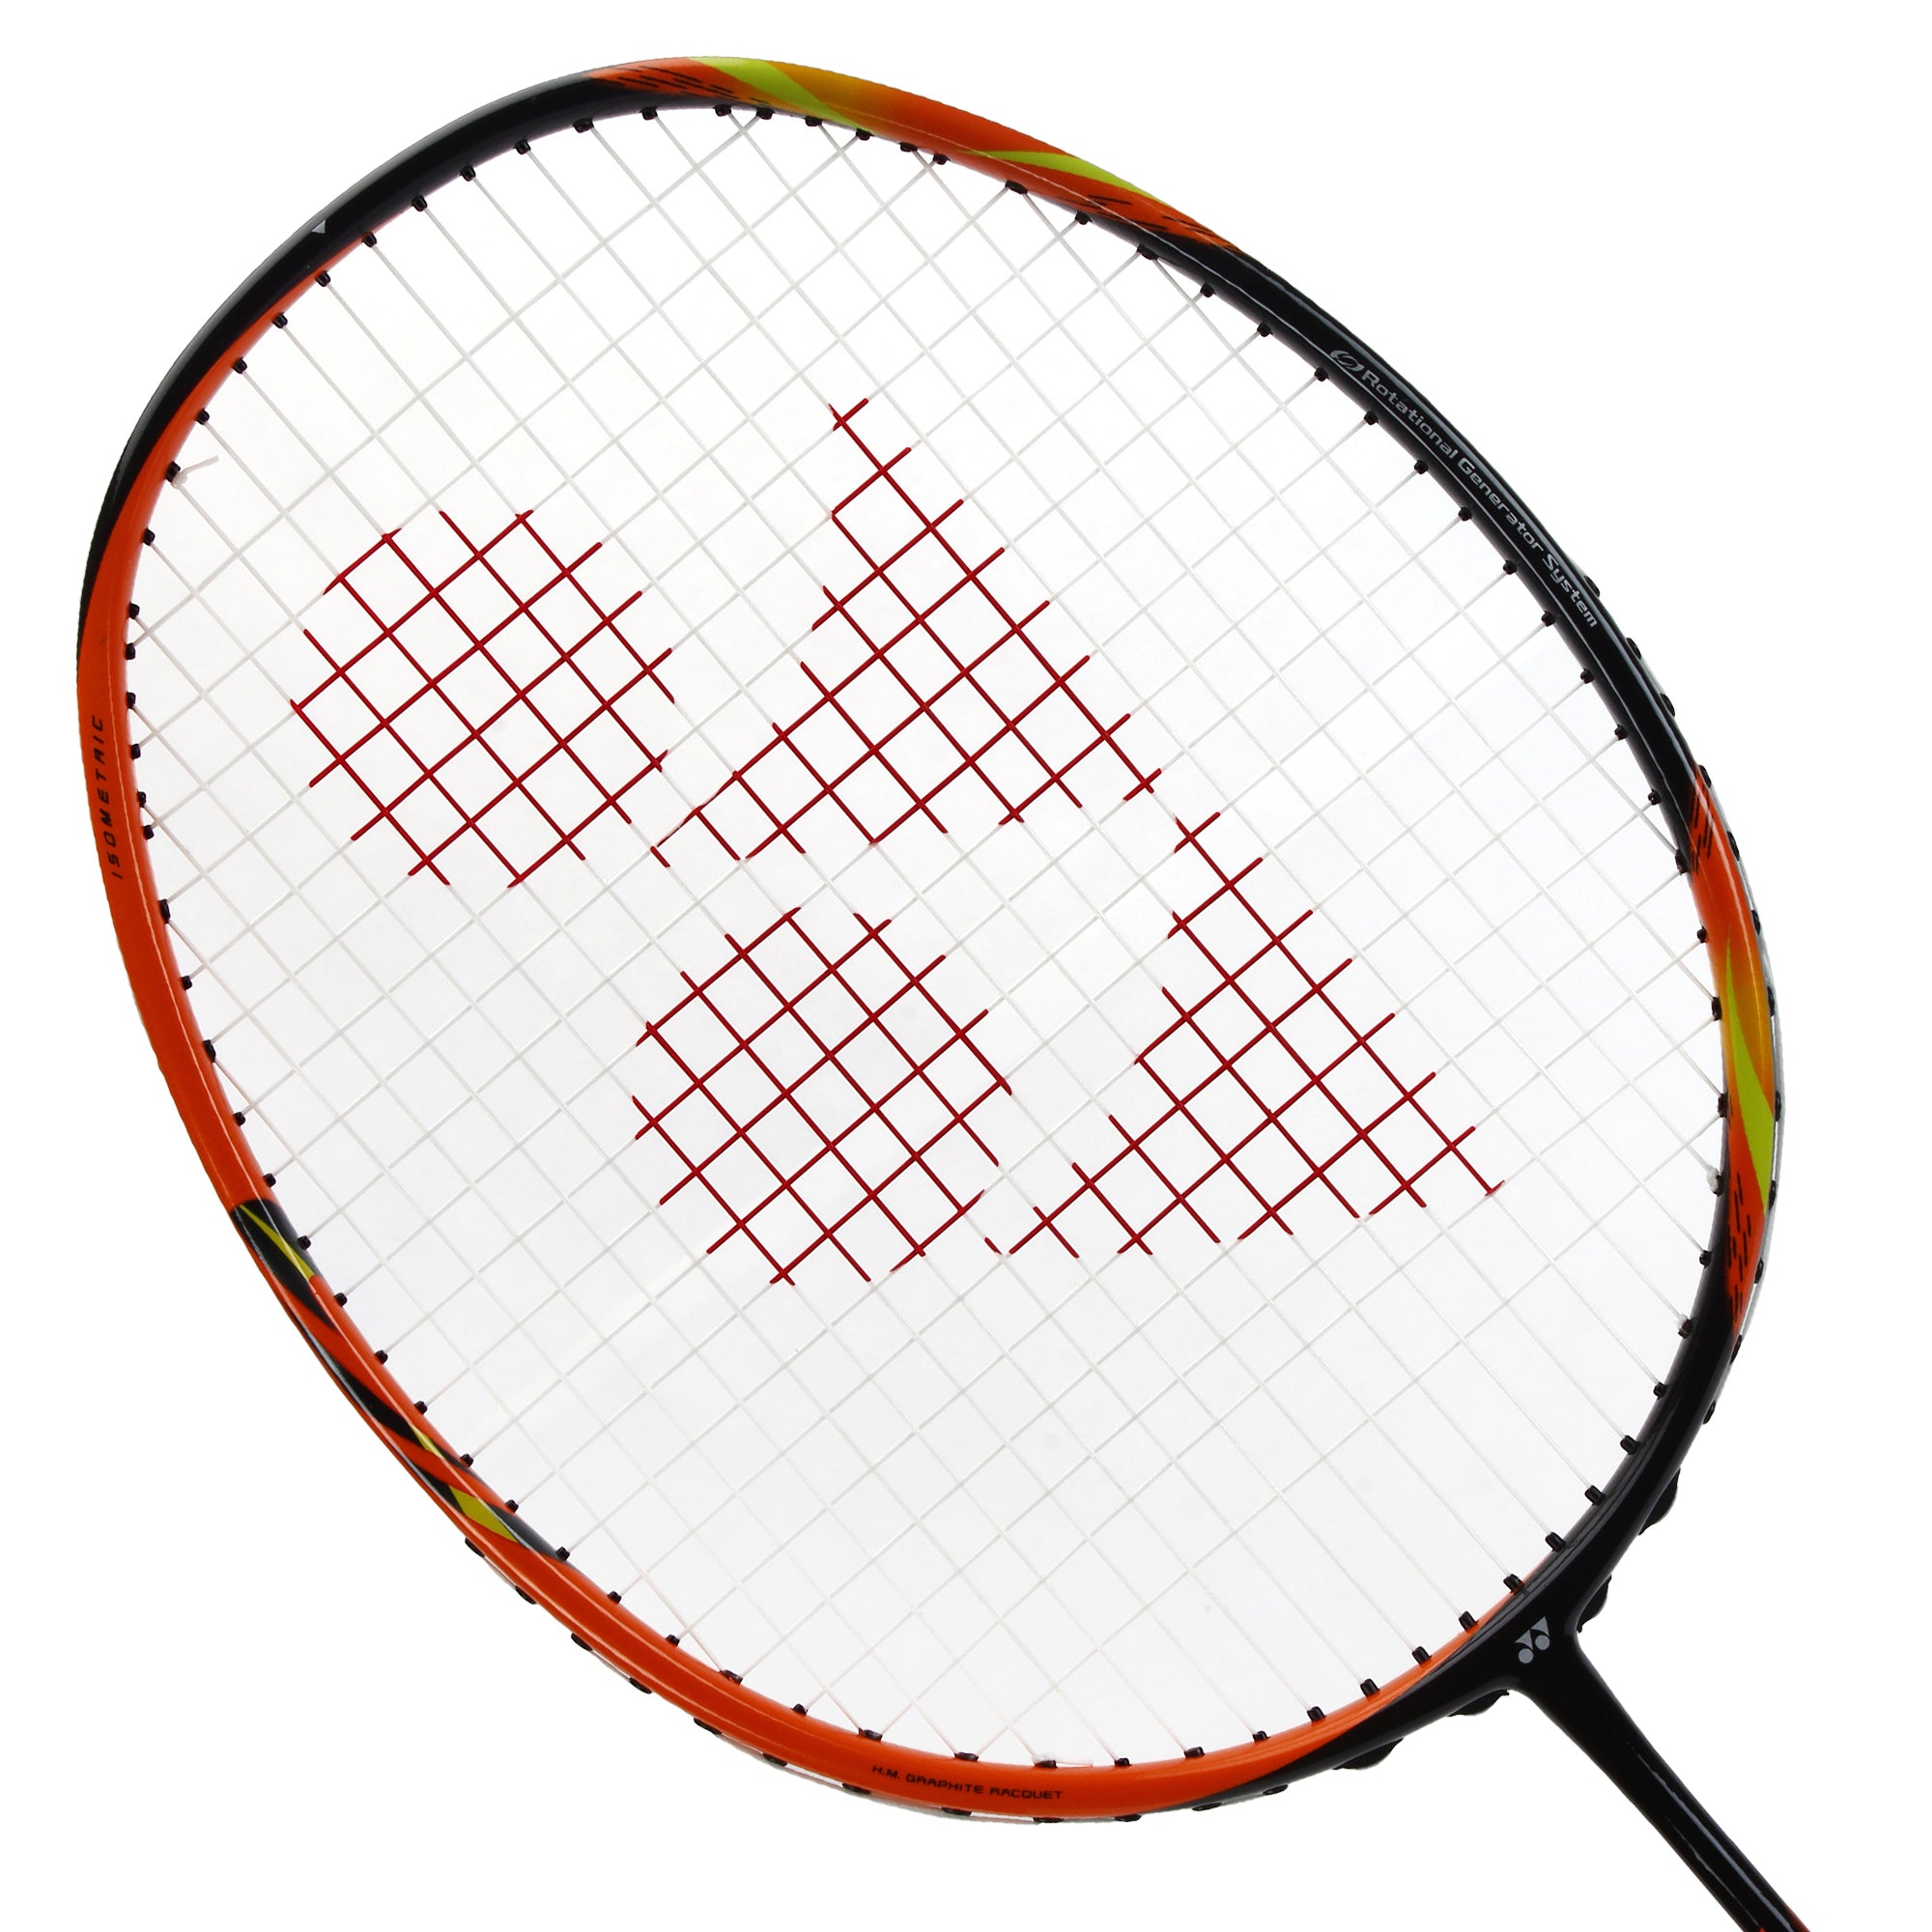 YONEX Badminton 2023 ENG By YONEX GmbH Issuu, 40% OFF